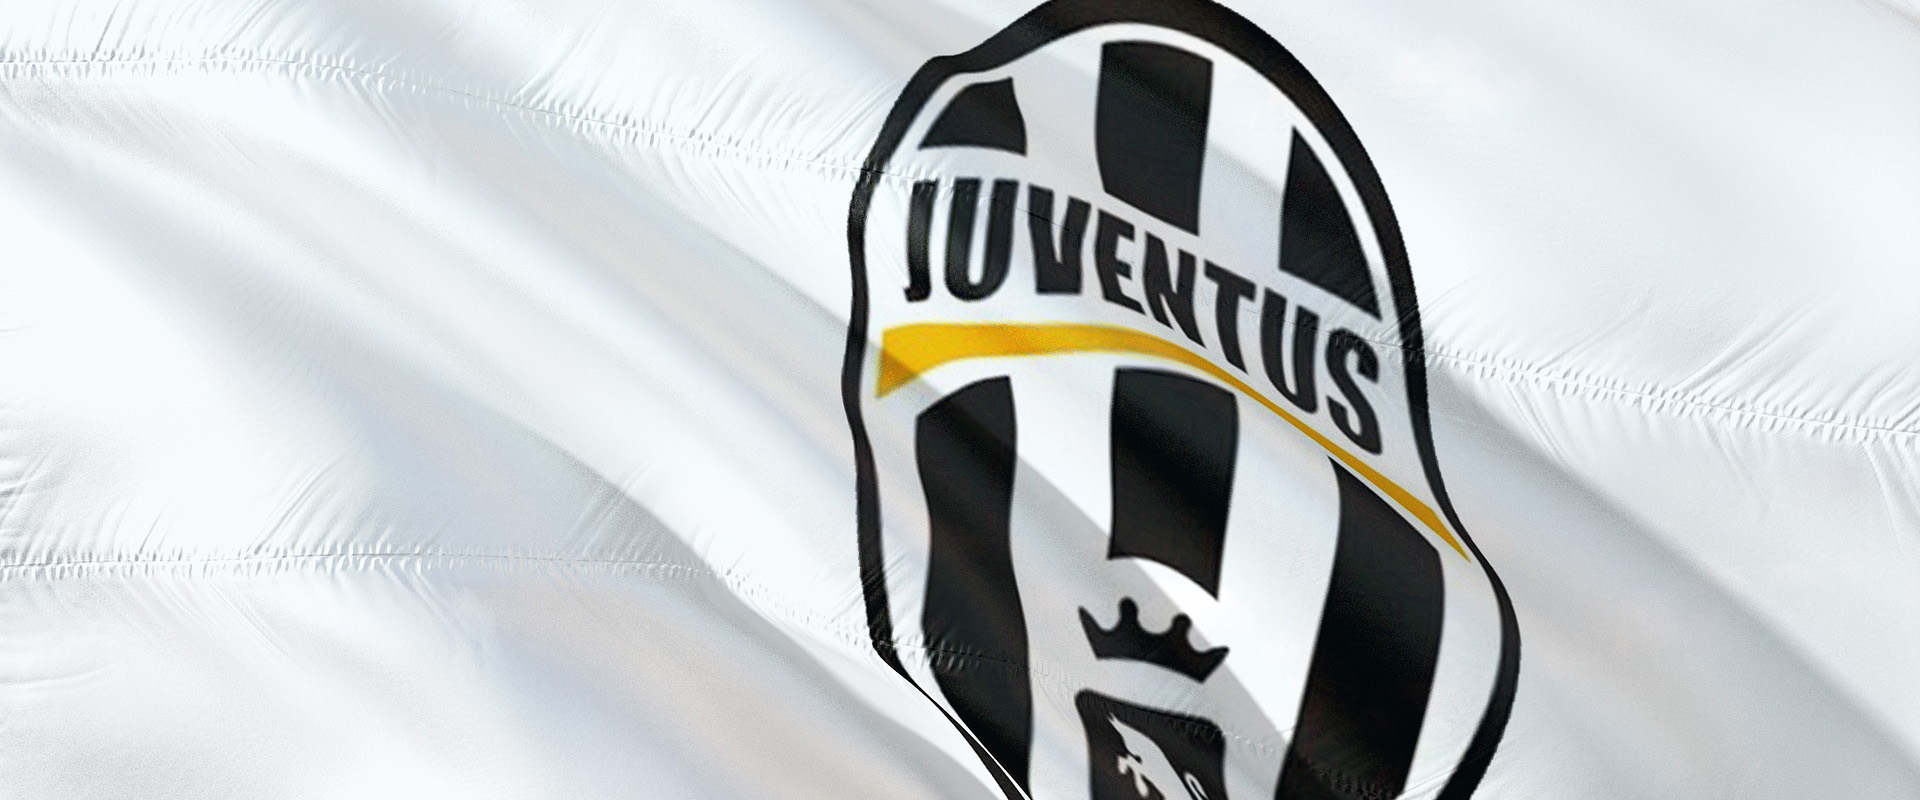 Juventus Sold $60 Million Of Ronaldo Jerseys In 24 Hours - Statistica